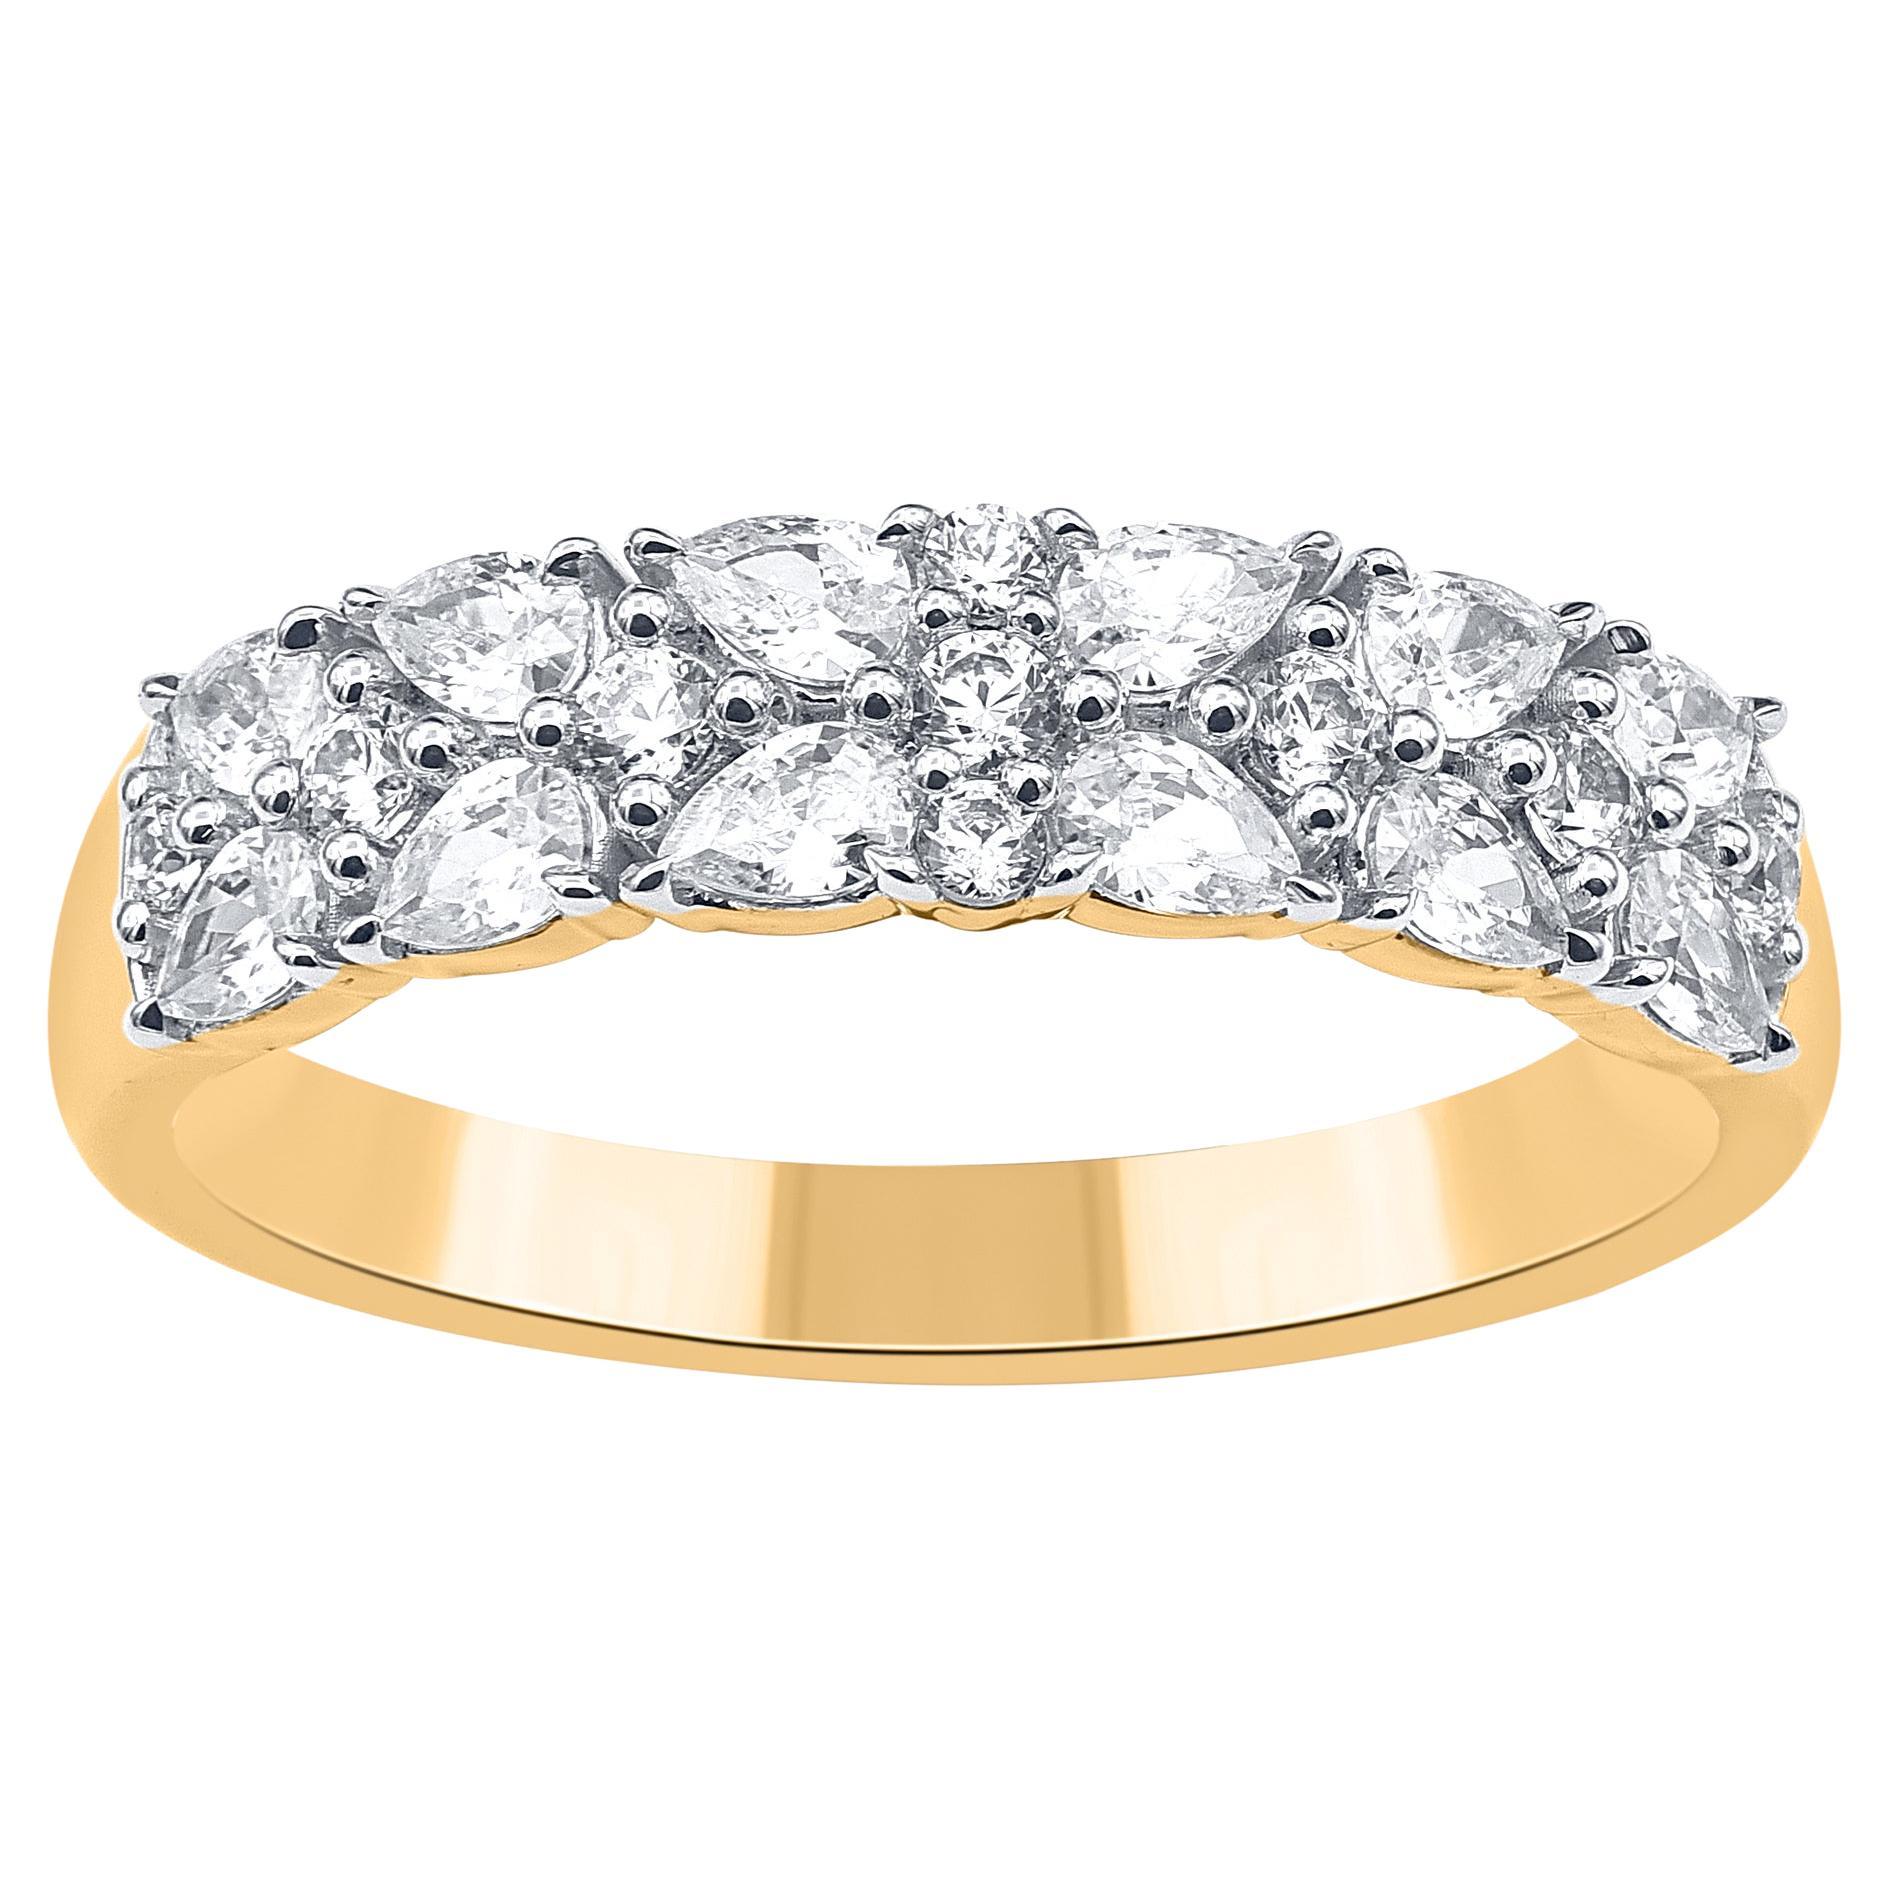 TJD 0.75 Carat Round & Pear Cut Diamond 14KT Yellow Gold Wedding Band Ring